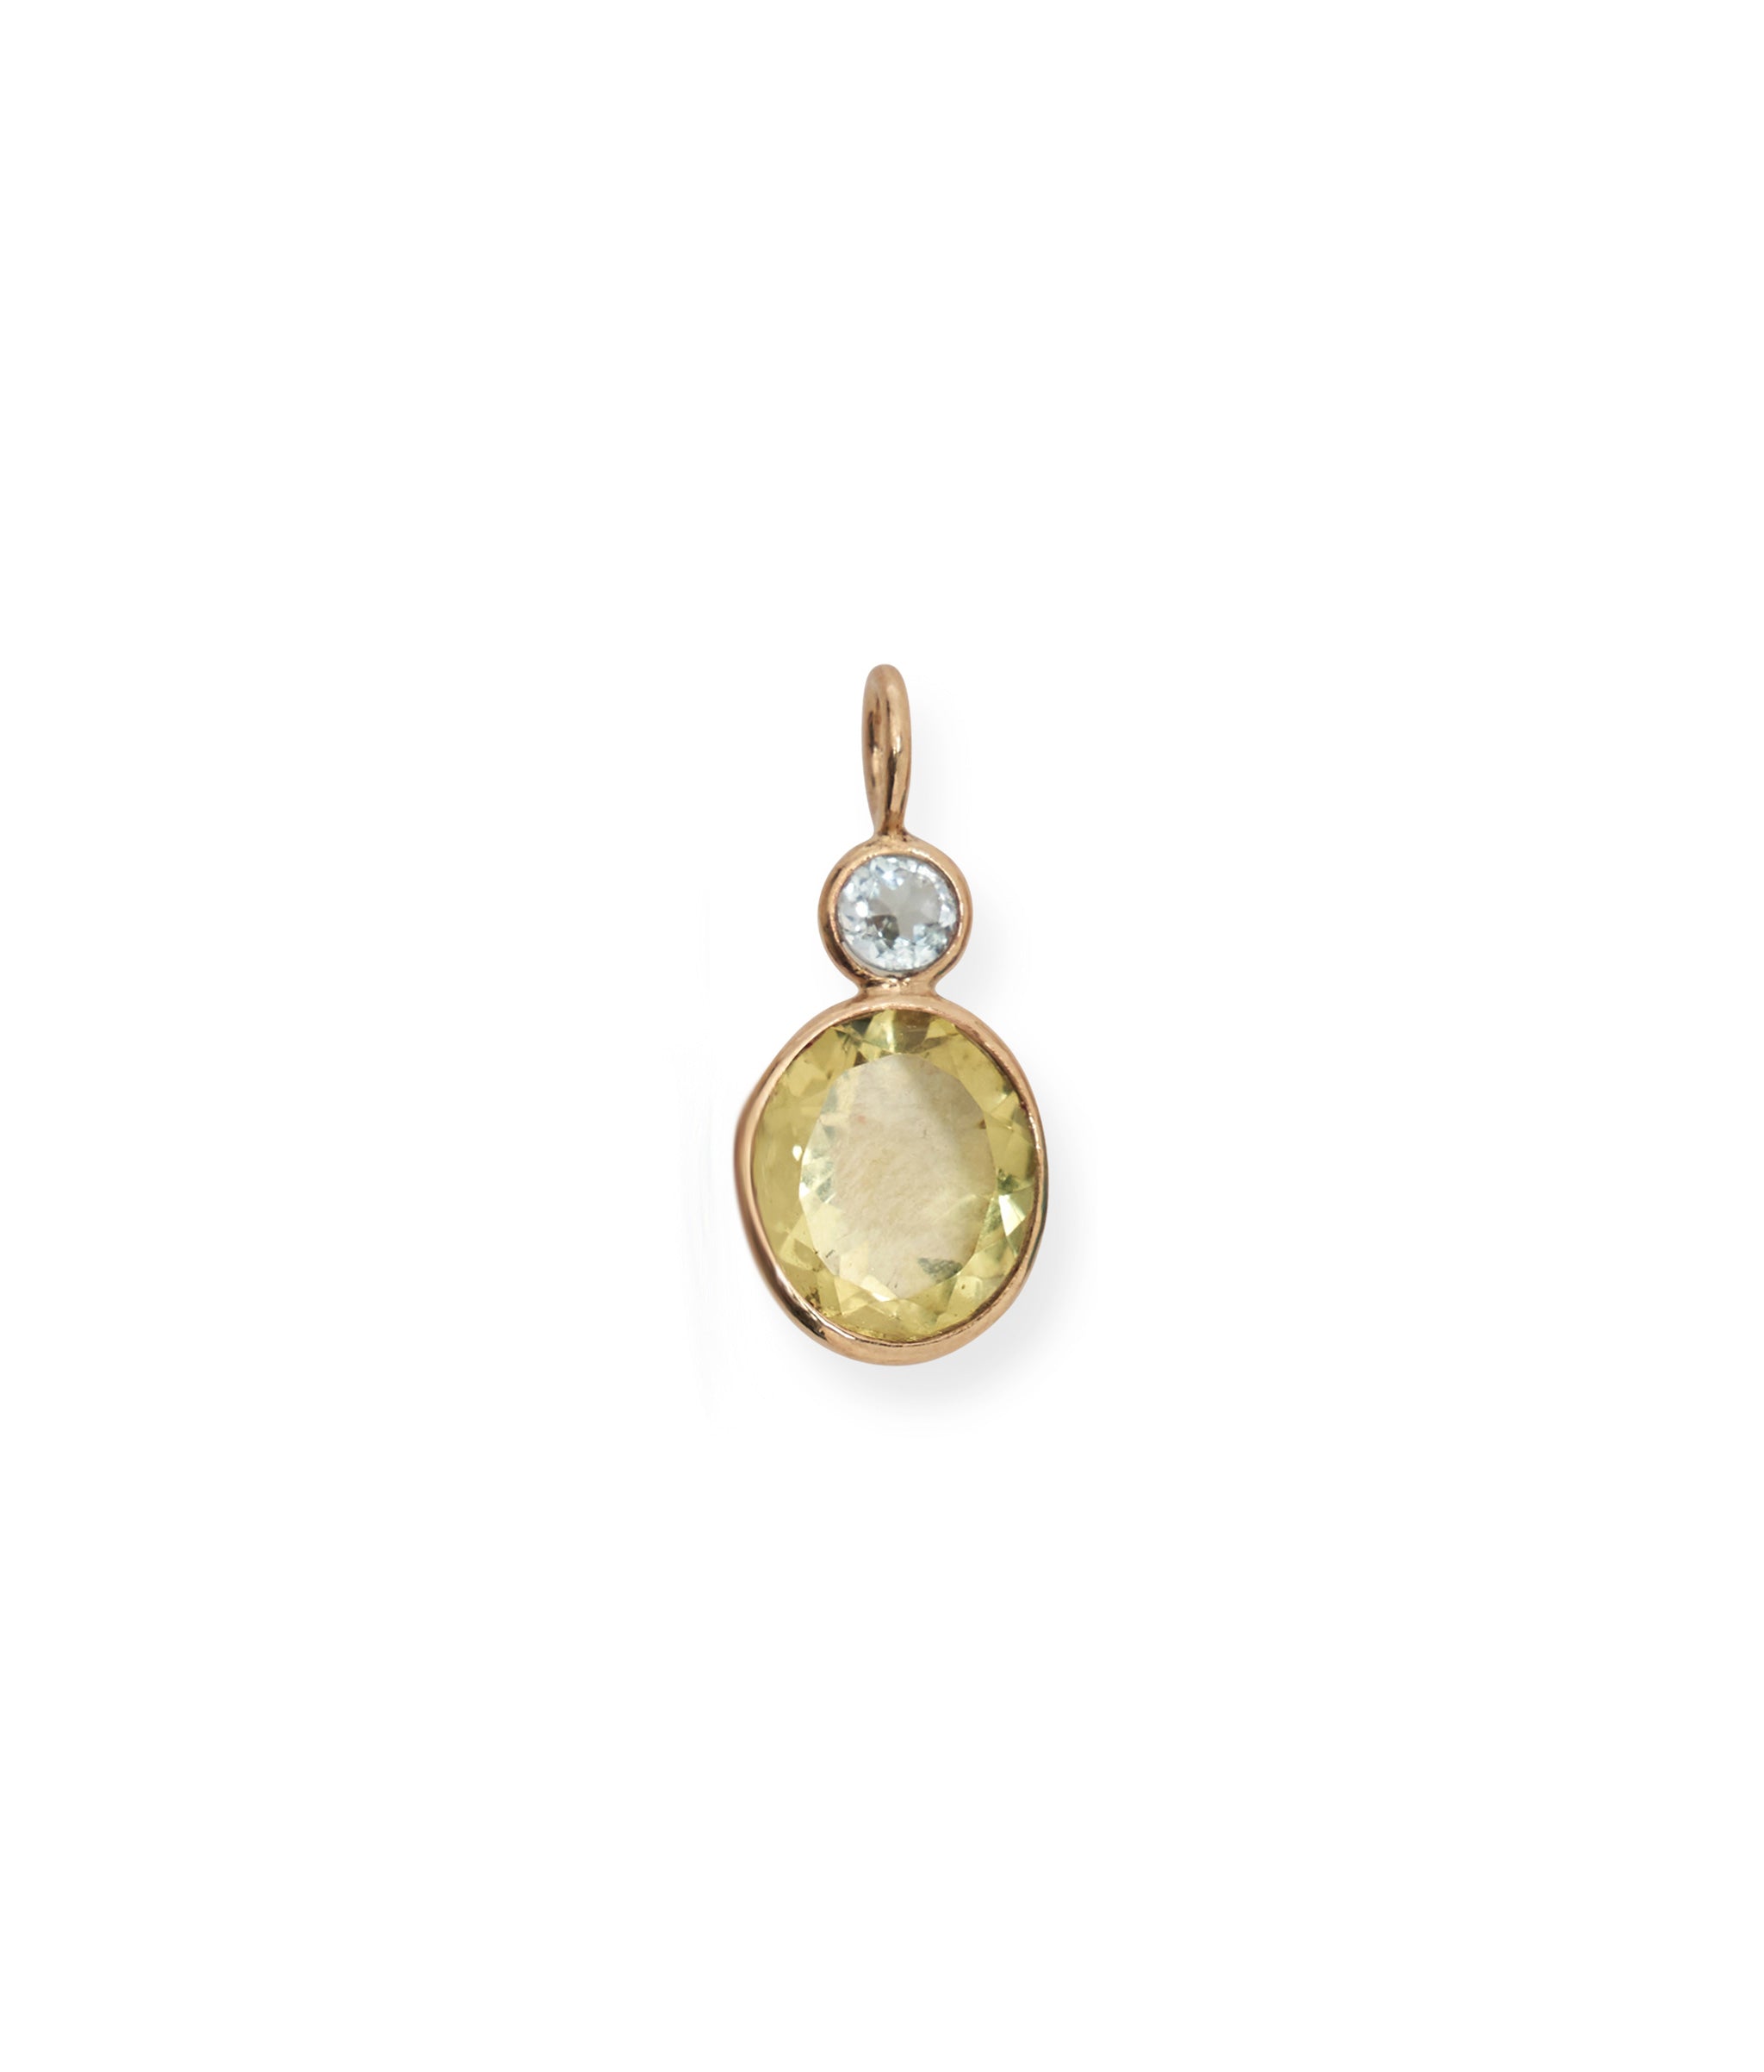 Sky Blue Topaz & Lemon Quartz 14k Gold Necklace Charm. Faceted blue topaz circle and lemon quartz oval with gold bezels